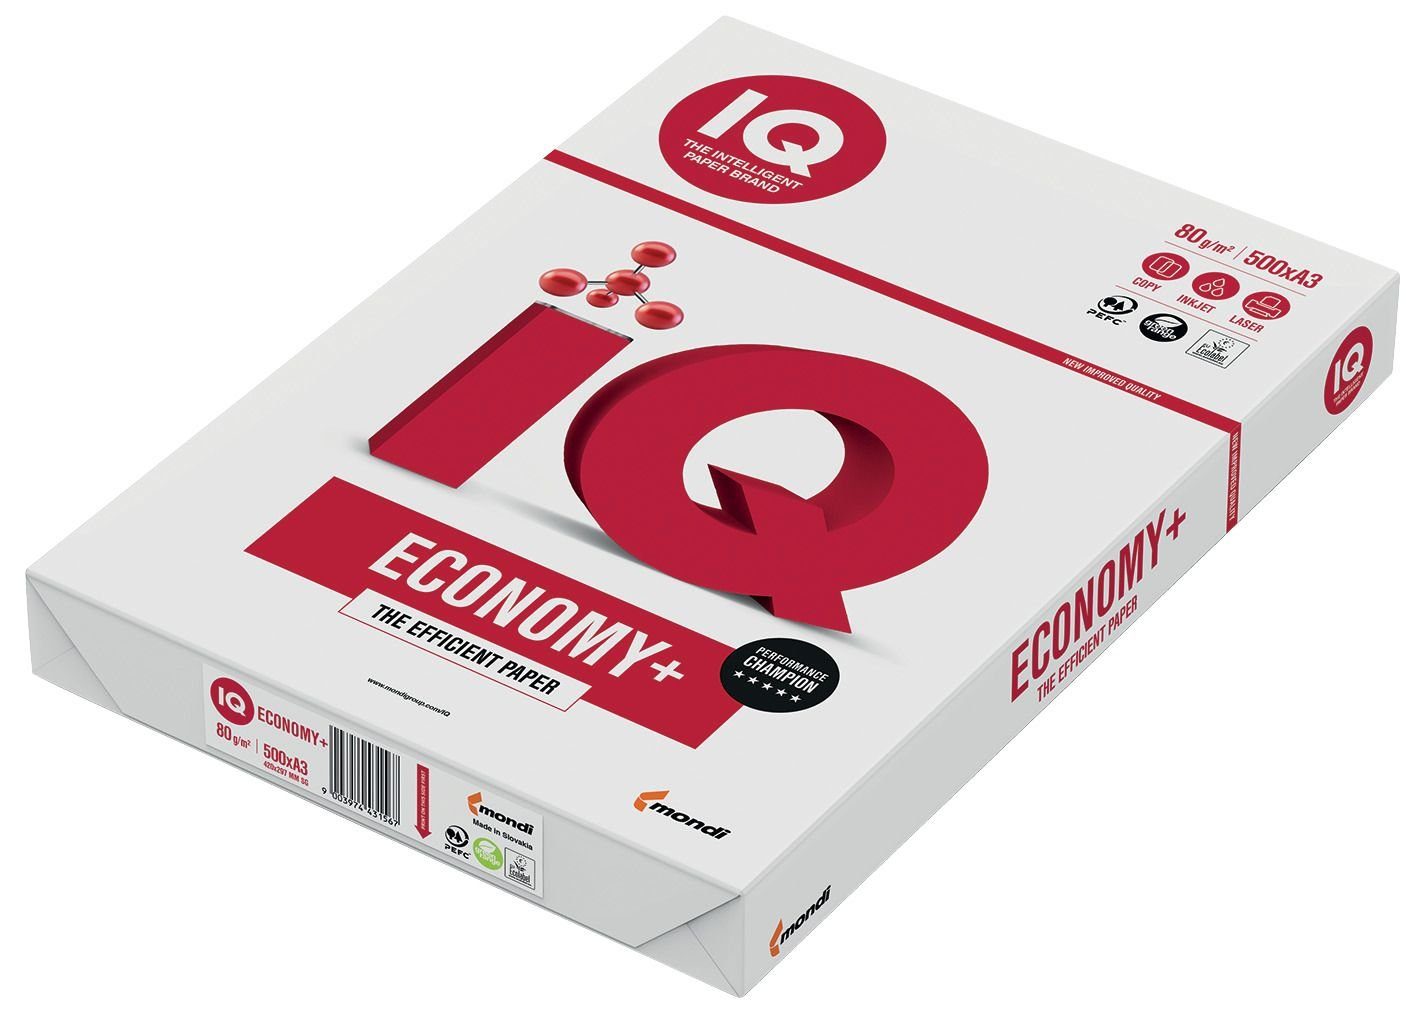 iQ Druckerpapier IQ economy + - A3, 80 g/qm, weiß, 500 Blatt